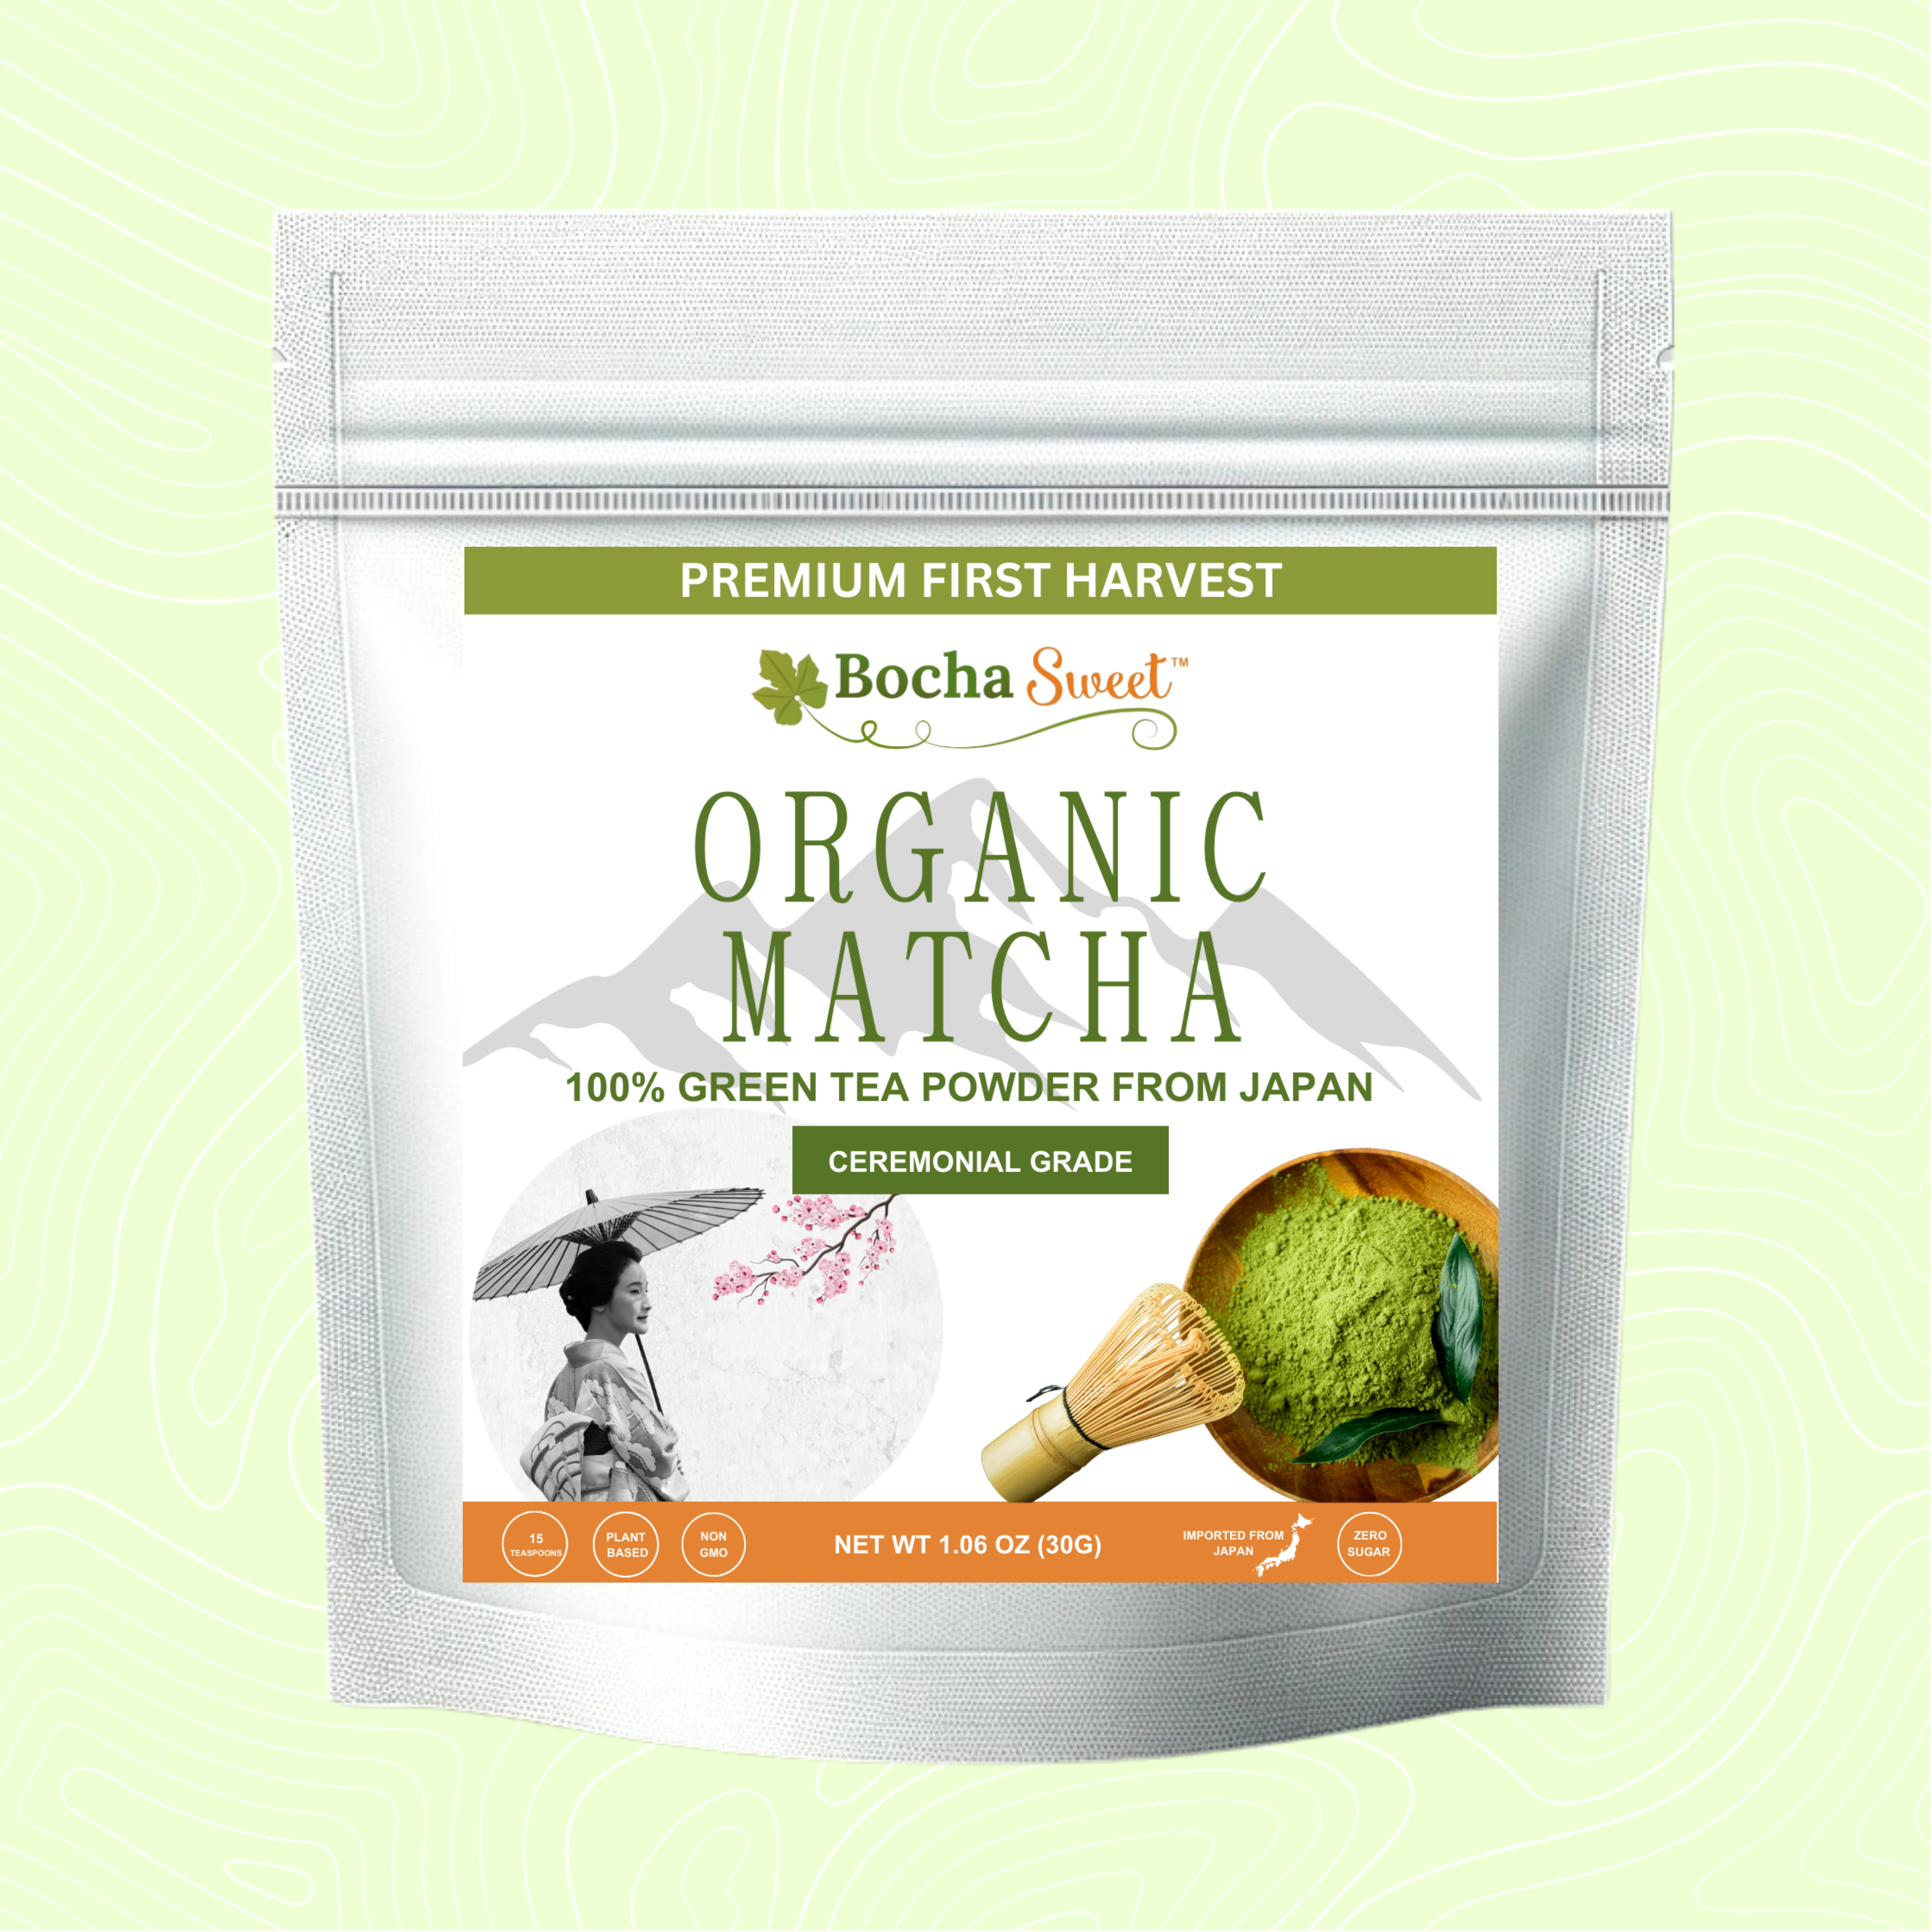 Organic Premium Ceremonial Grade Matcha tea 30g - IRO